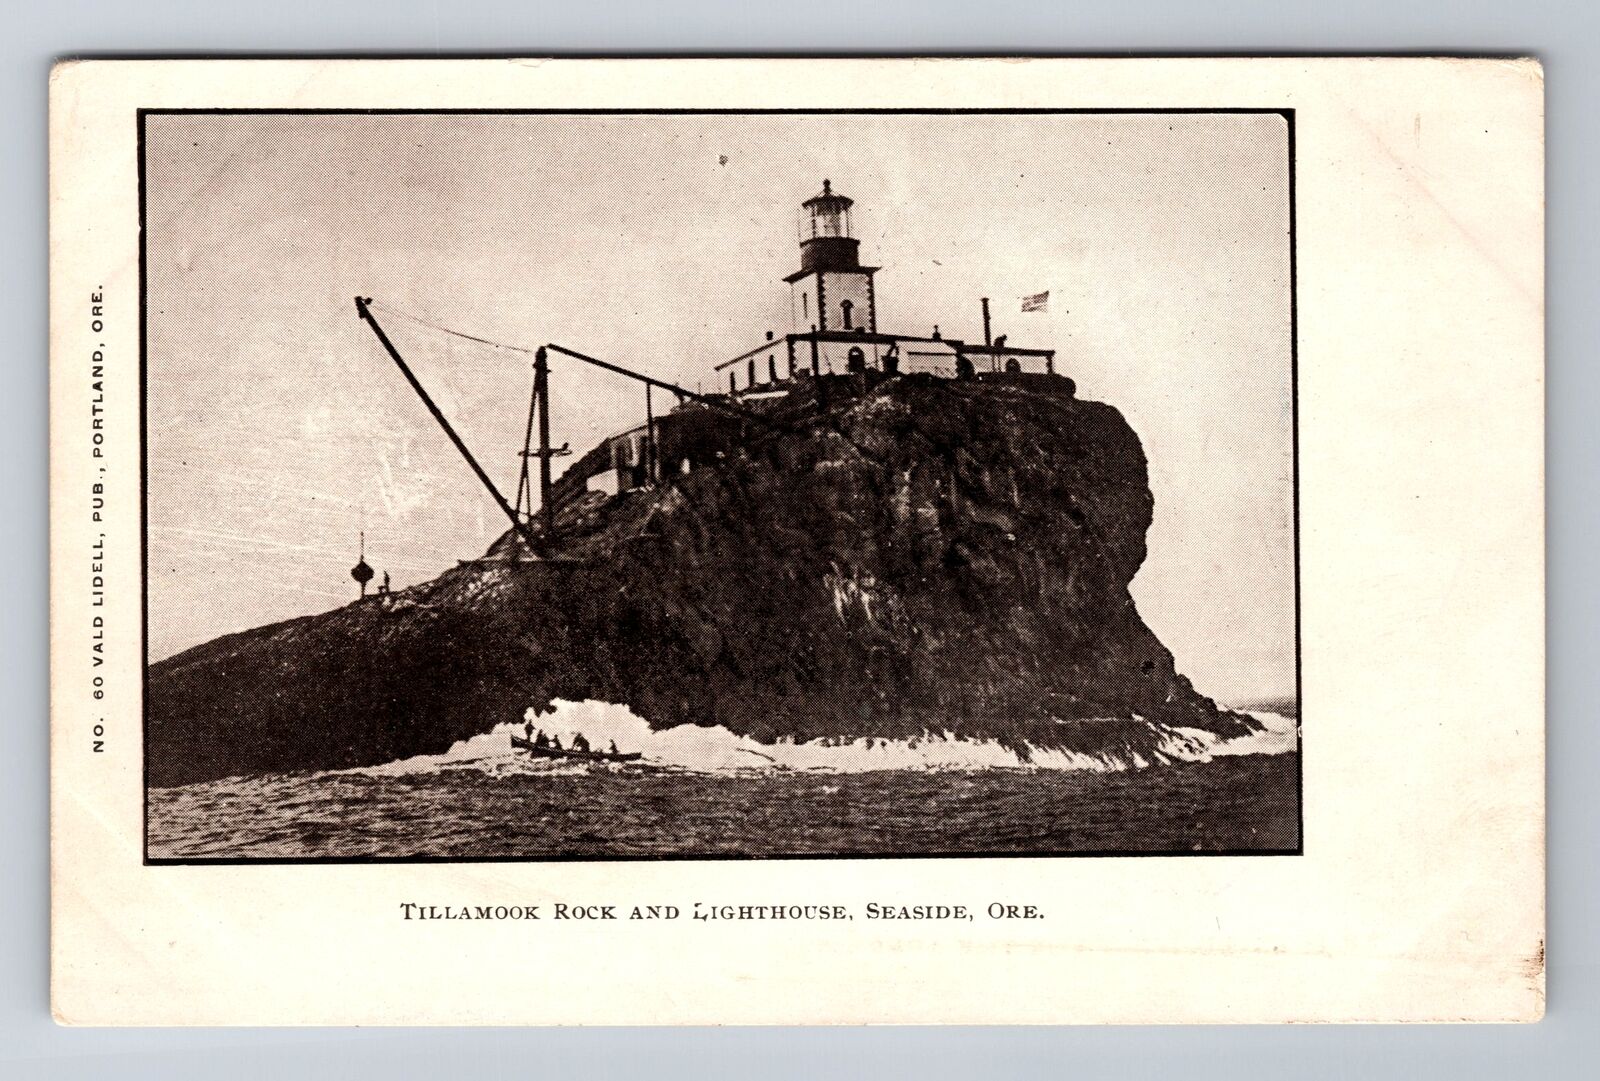 Seaside, OR-Oregon, Tillamook Rock and Lighthouse c1910, Vintage Postcard